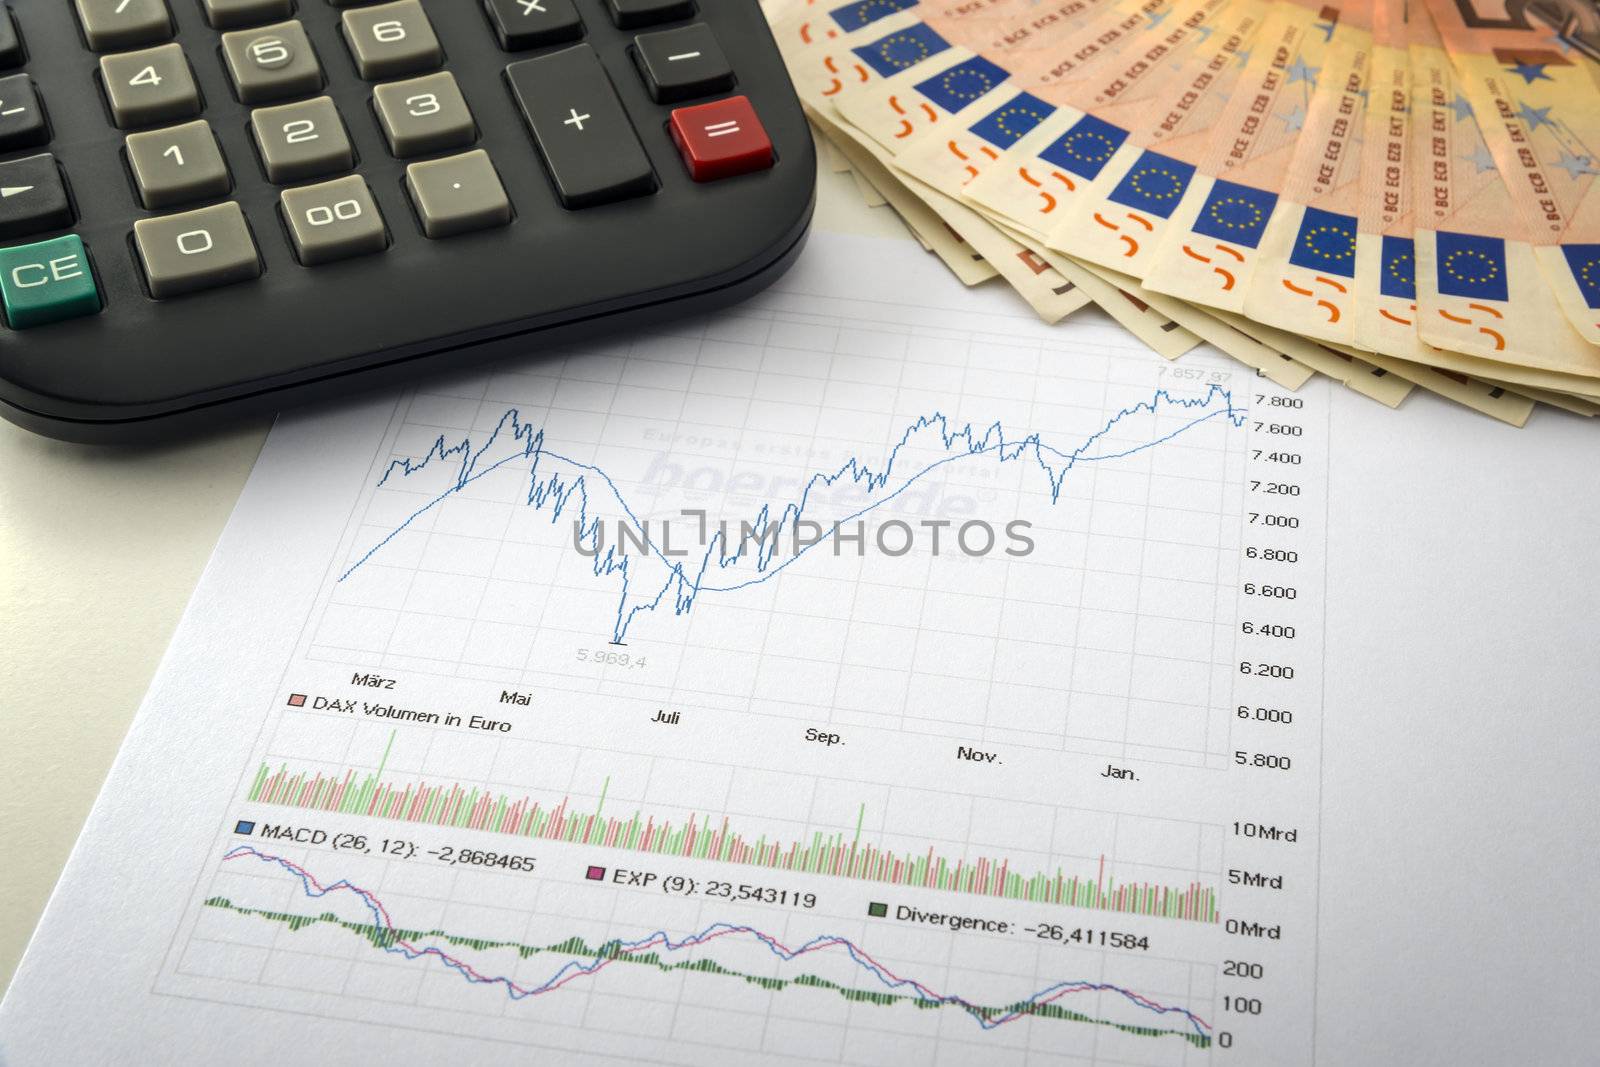 Caculator, dax chart and euro money